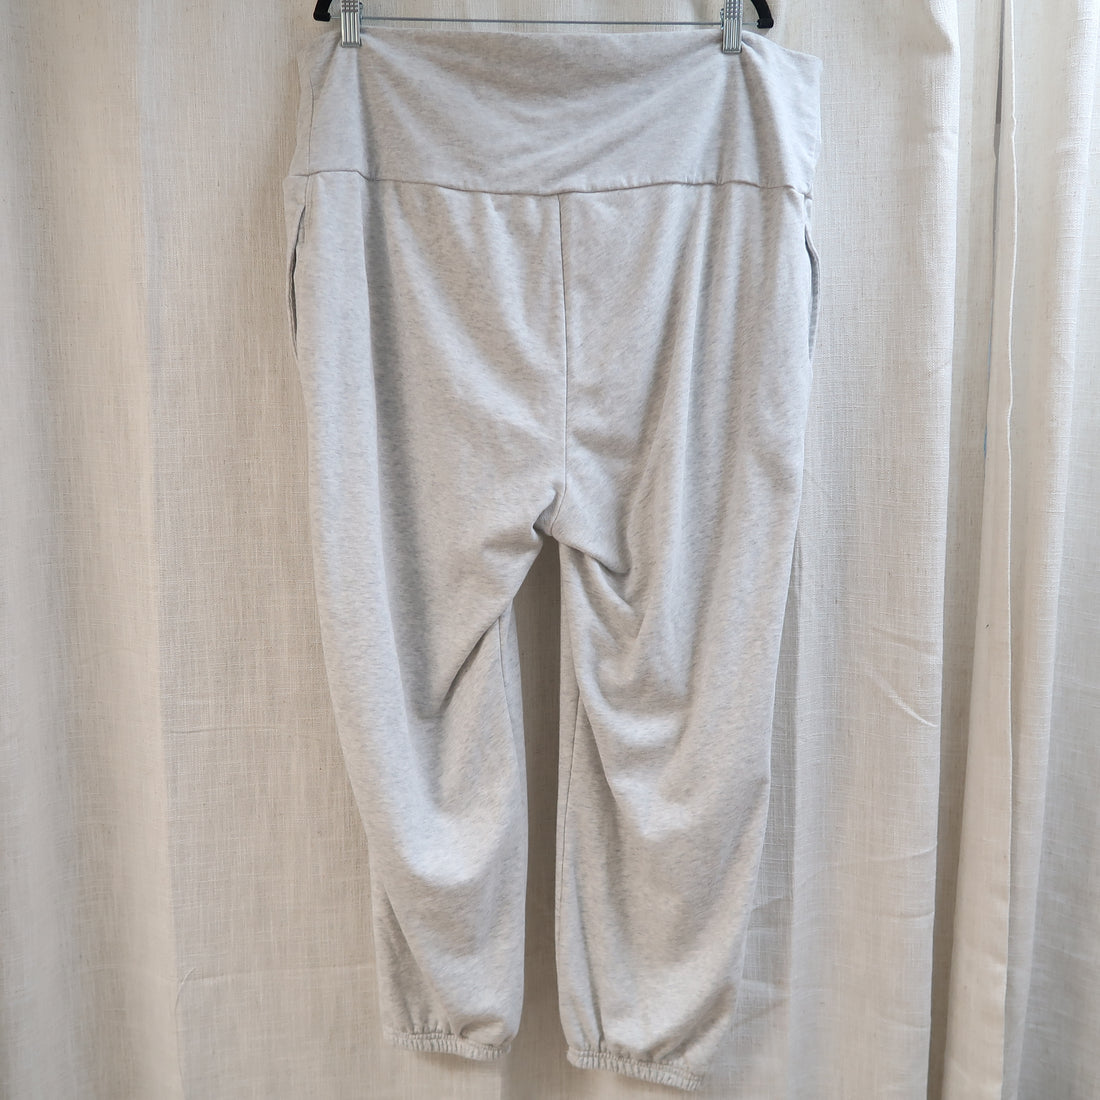 Old Navy - Maternity Pants (Women&